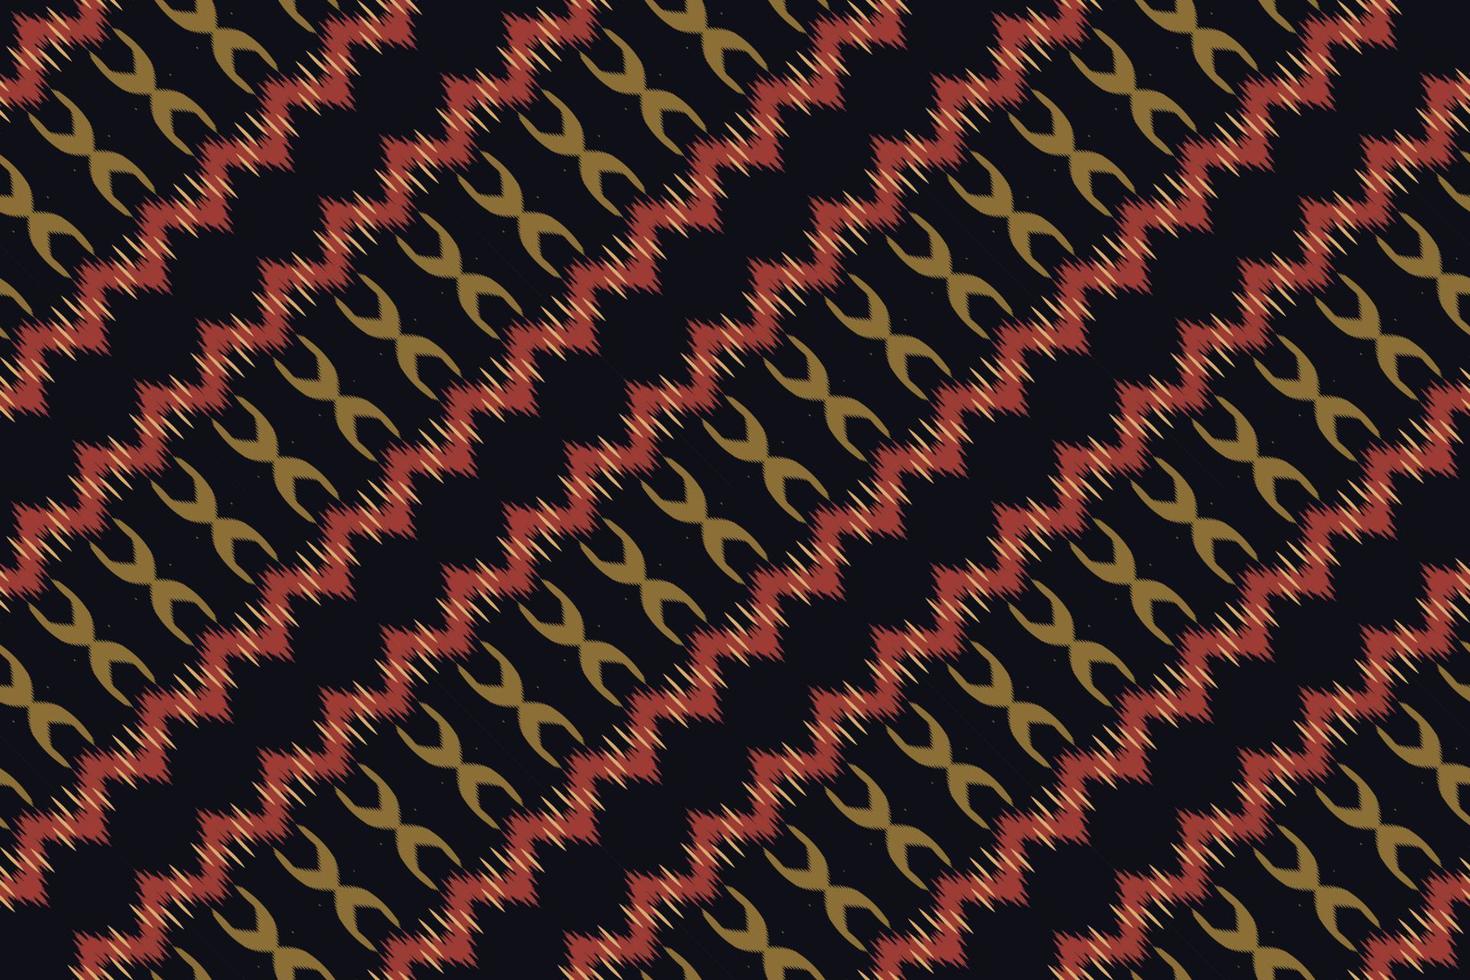 ikat disegni tribale sfondo senza soluzione di continuità modello. etnico geometrico batik ikkat digitale vettore tessile design per stampe tessuto saree Mughal spazzola simbolo andane struttura Kurti kurtis kurtas